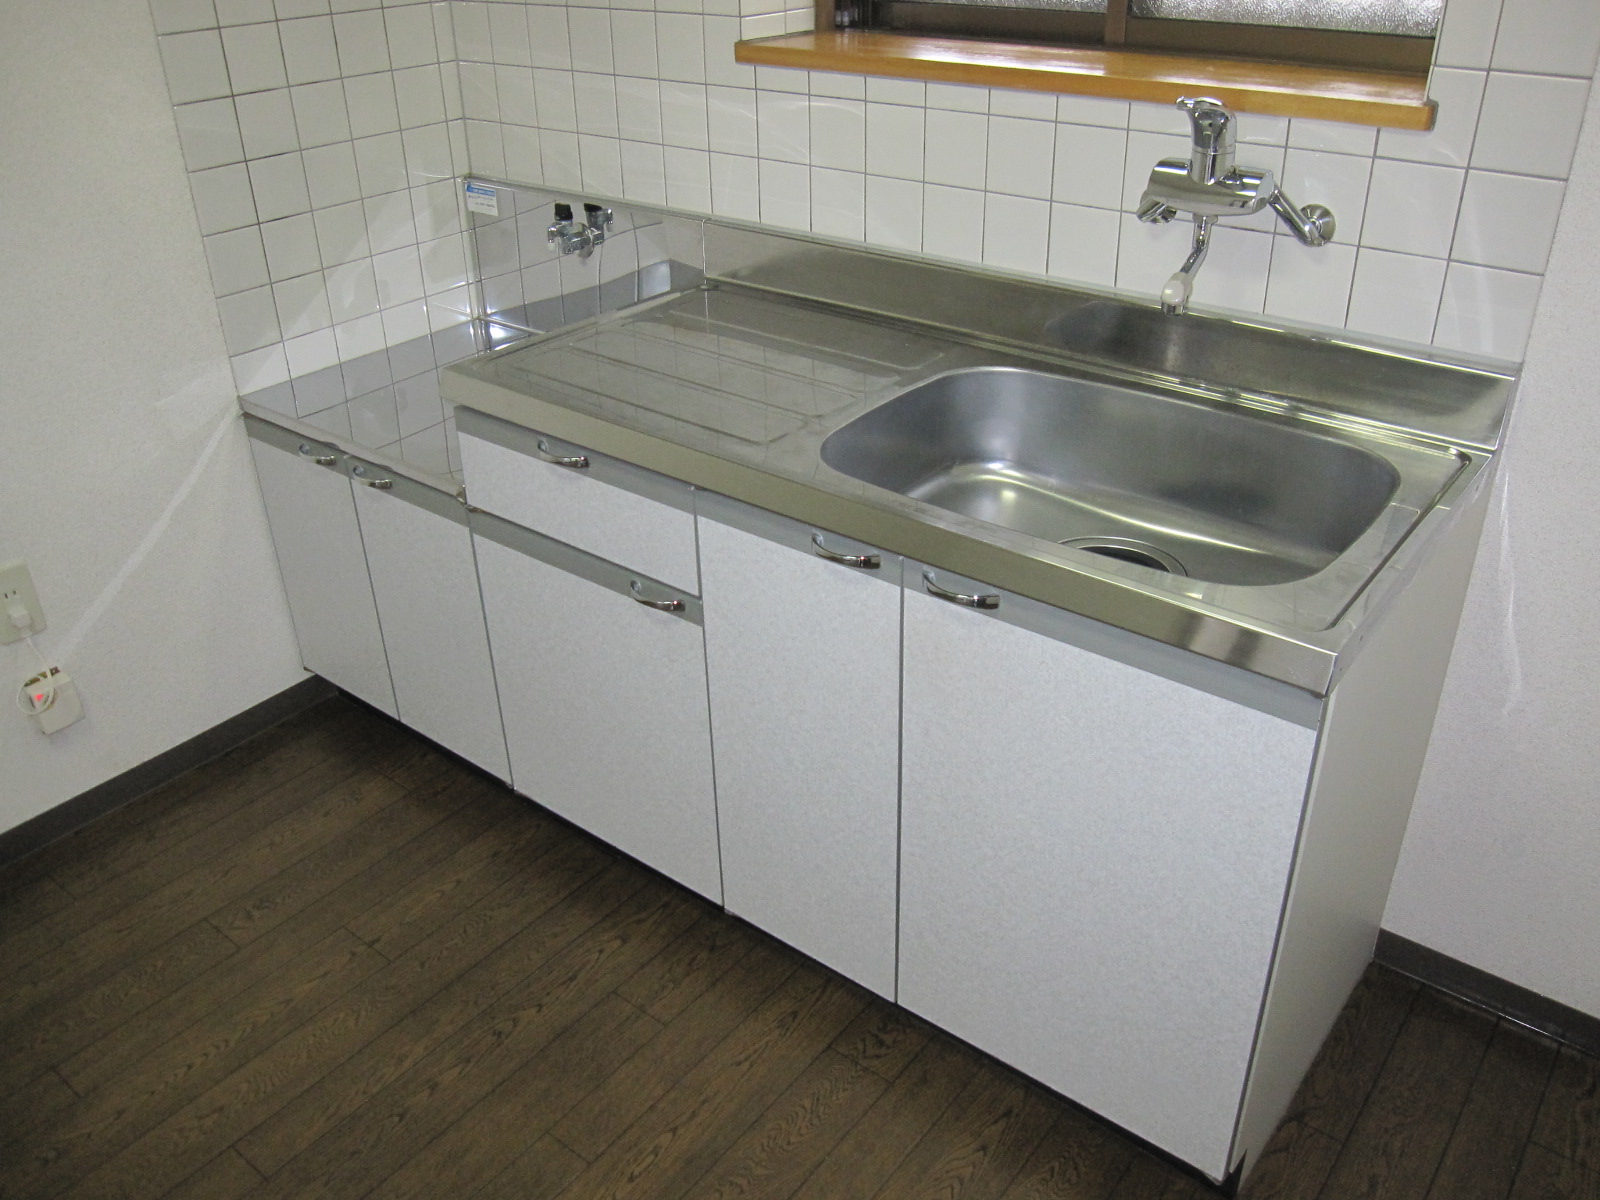 Kitchen. Single lever water washing